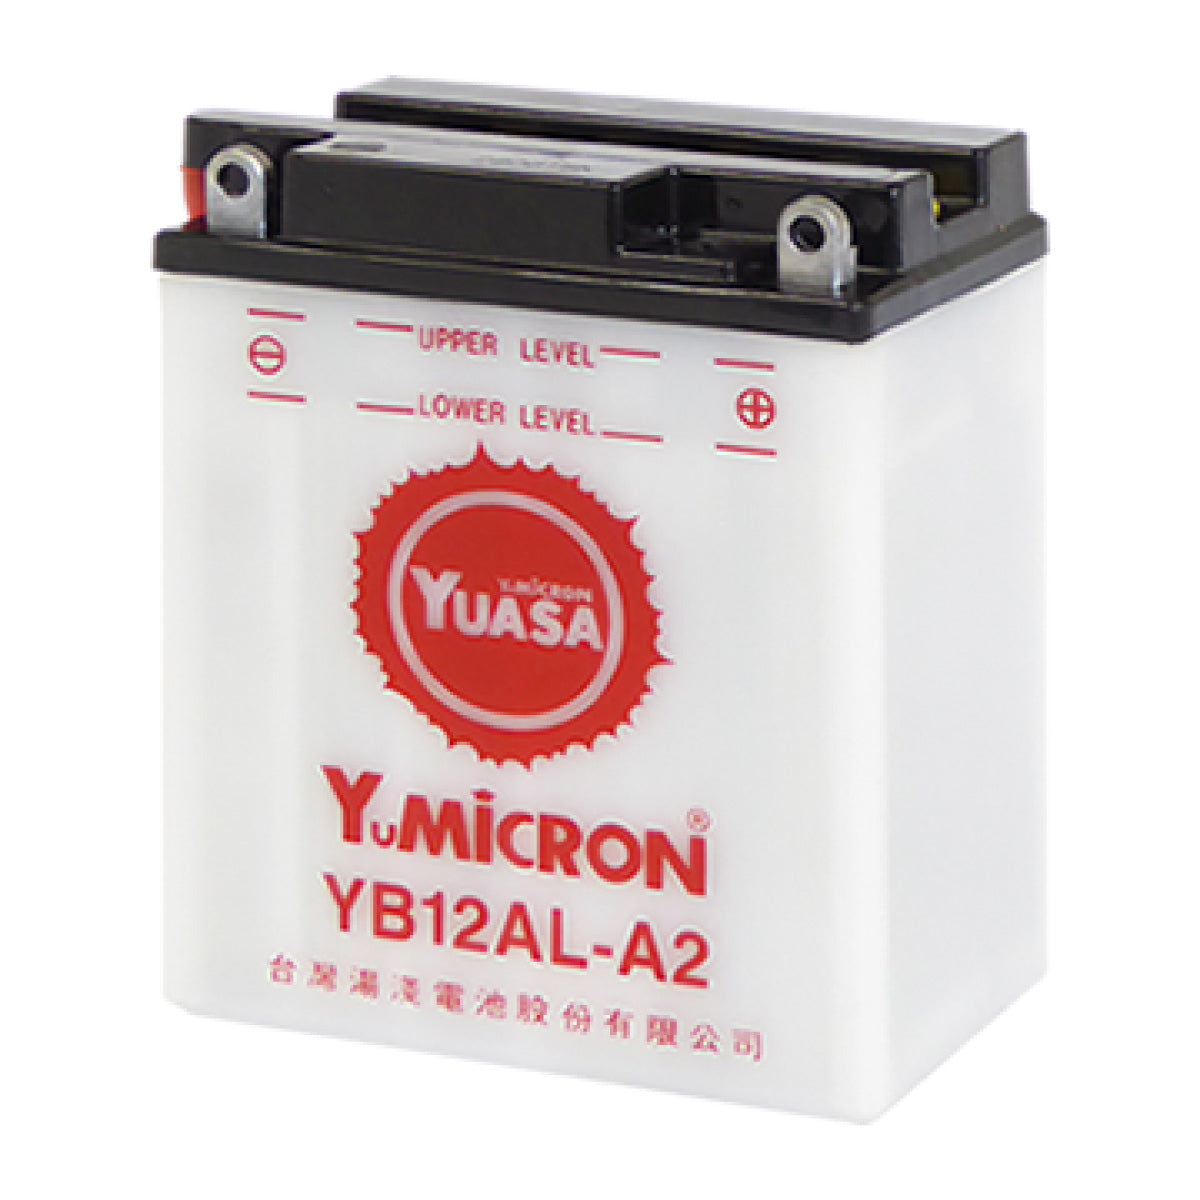 GS YUASA [ ジーエスユアサ ] バイク用バッテリー YB12AL-A2